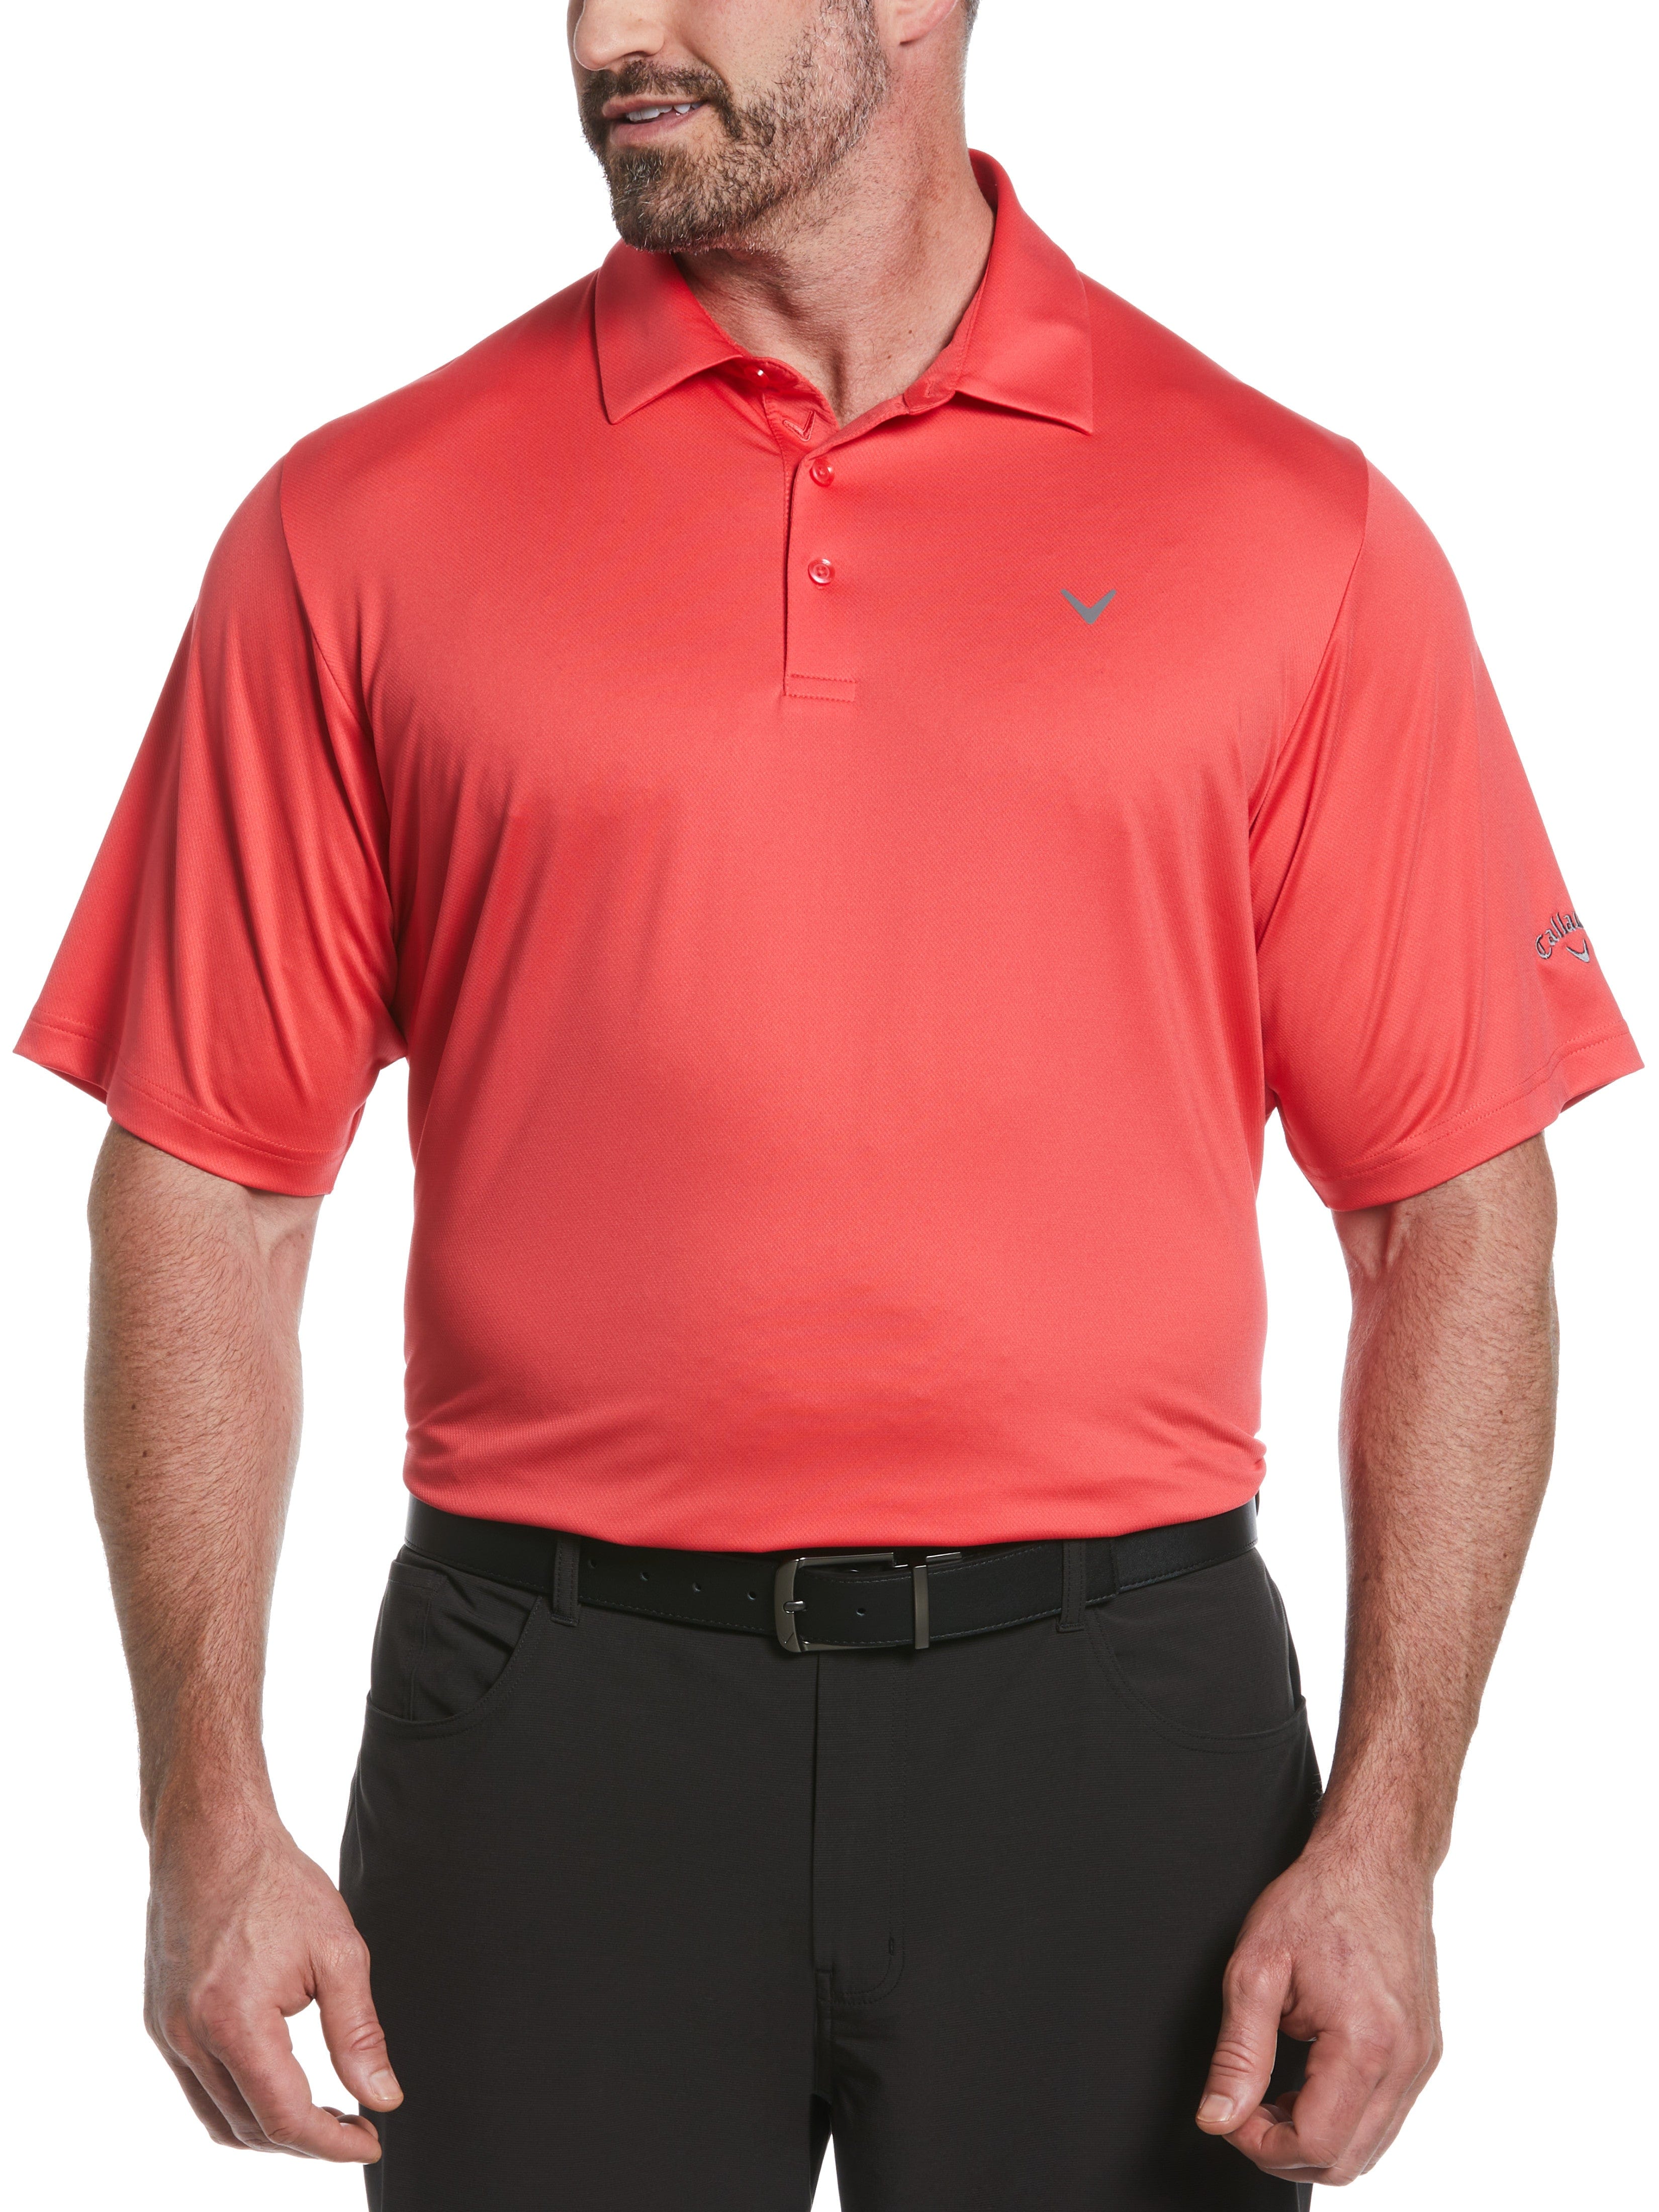 Callaway Apparel Mens Big & Tall Solid Swing Tech Golf Polo Shirt, Size 3X, Teaberry Pink, Polyester/Elastane | Golf Apparel Shop